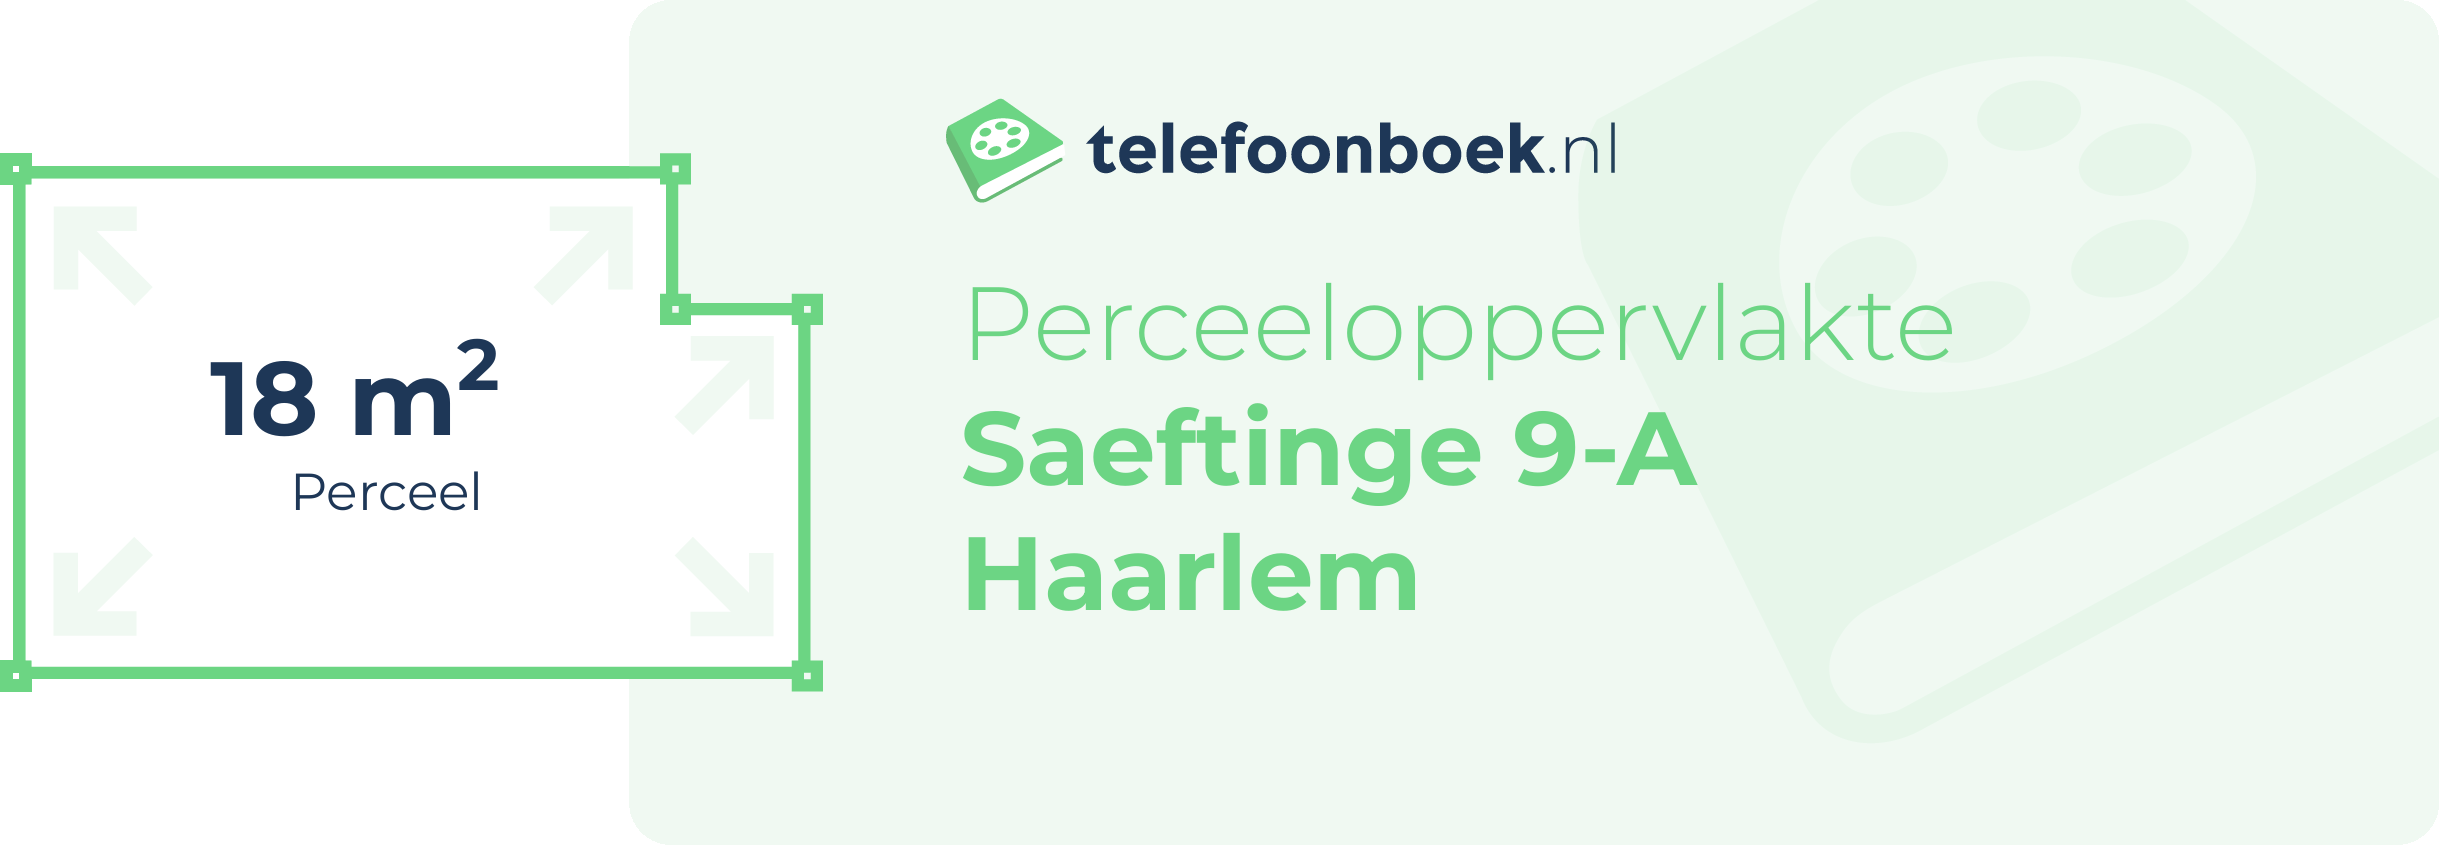 Perceeloppervlakte Saeftinge 9-A Haarlem